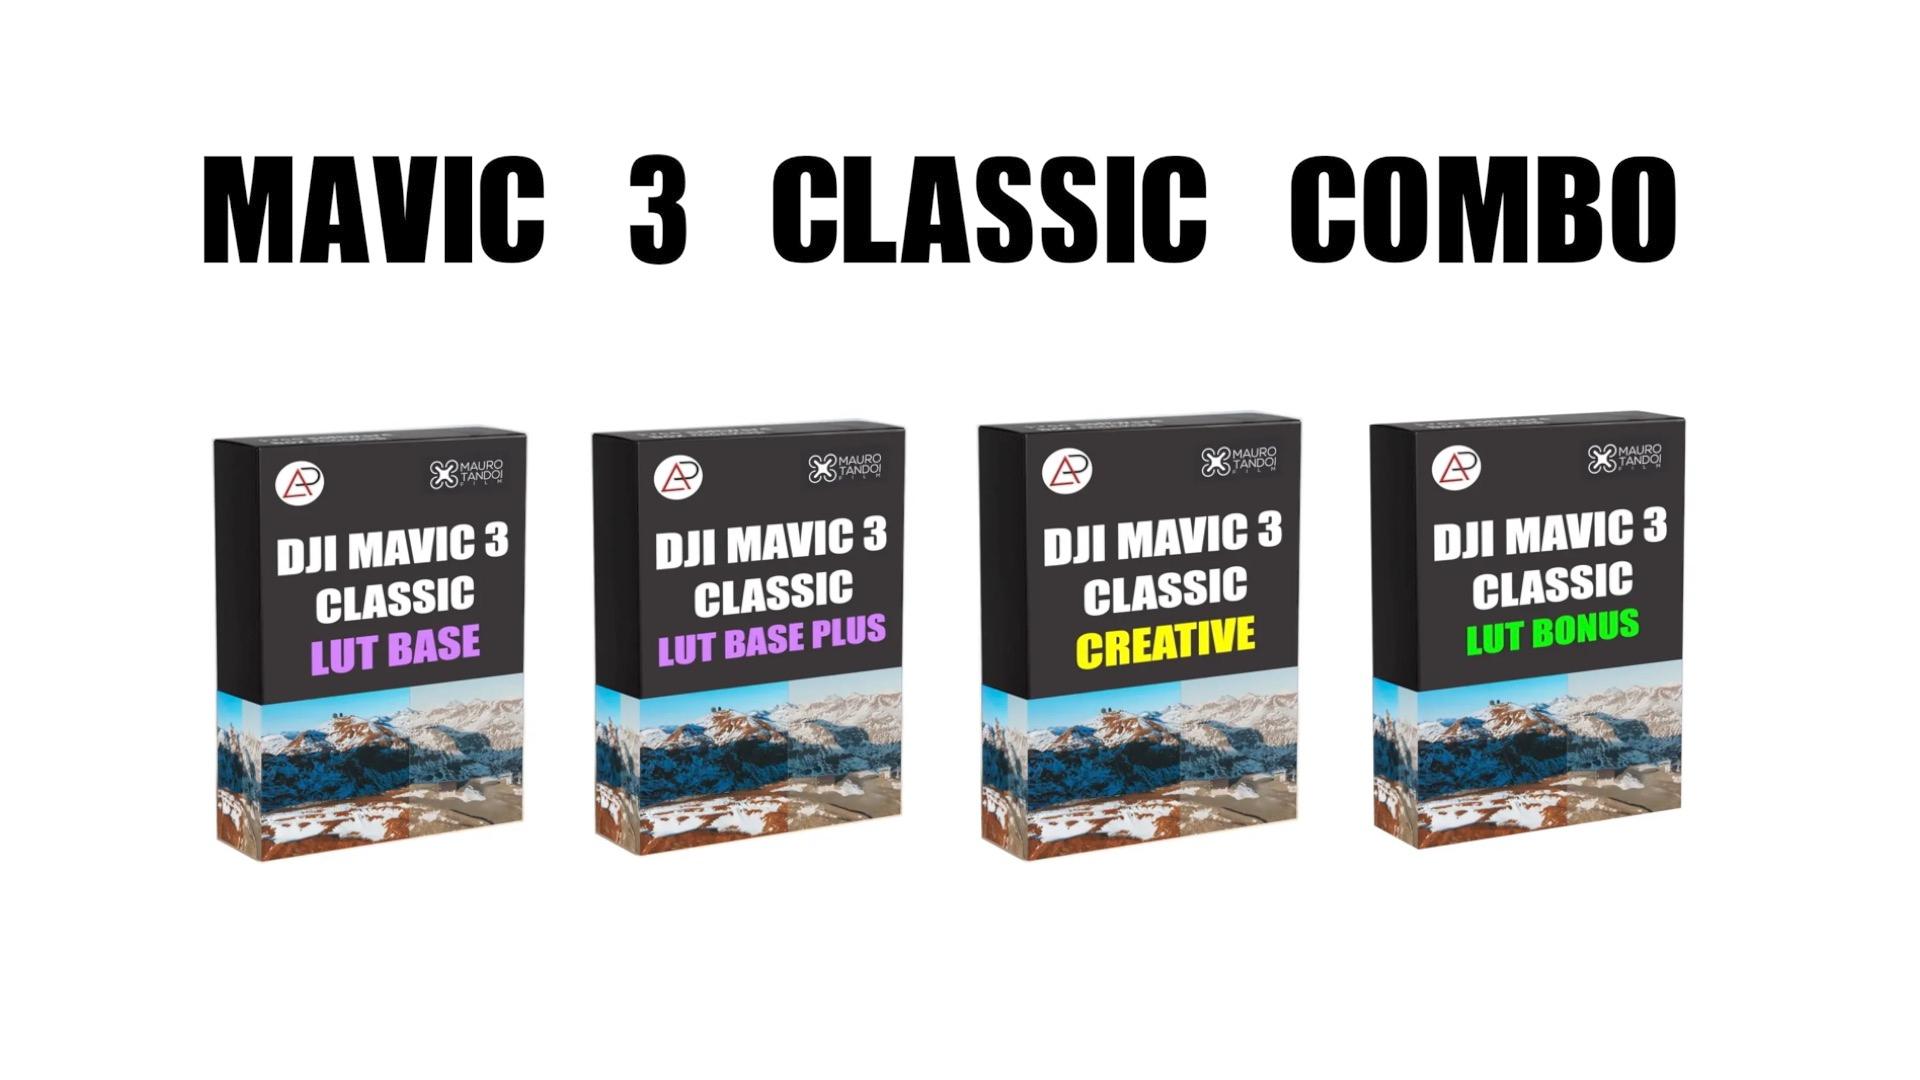 DJI MAVIC 3 CLASSIC LUT COMBO